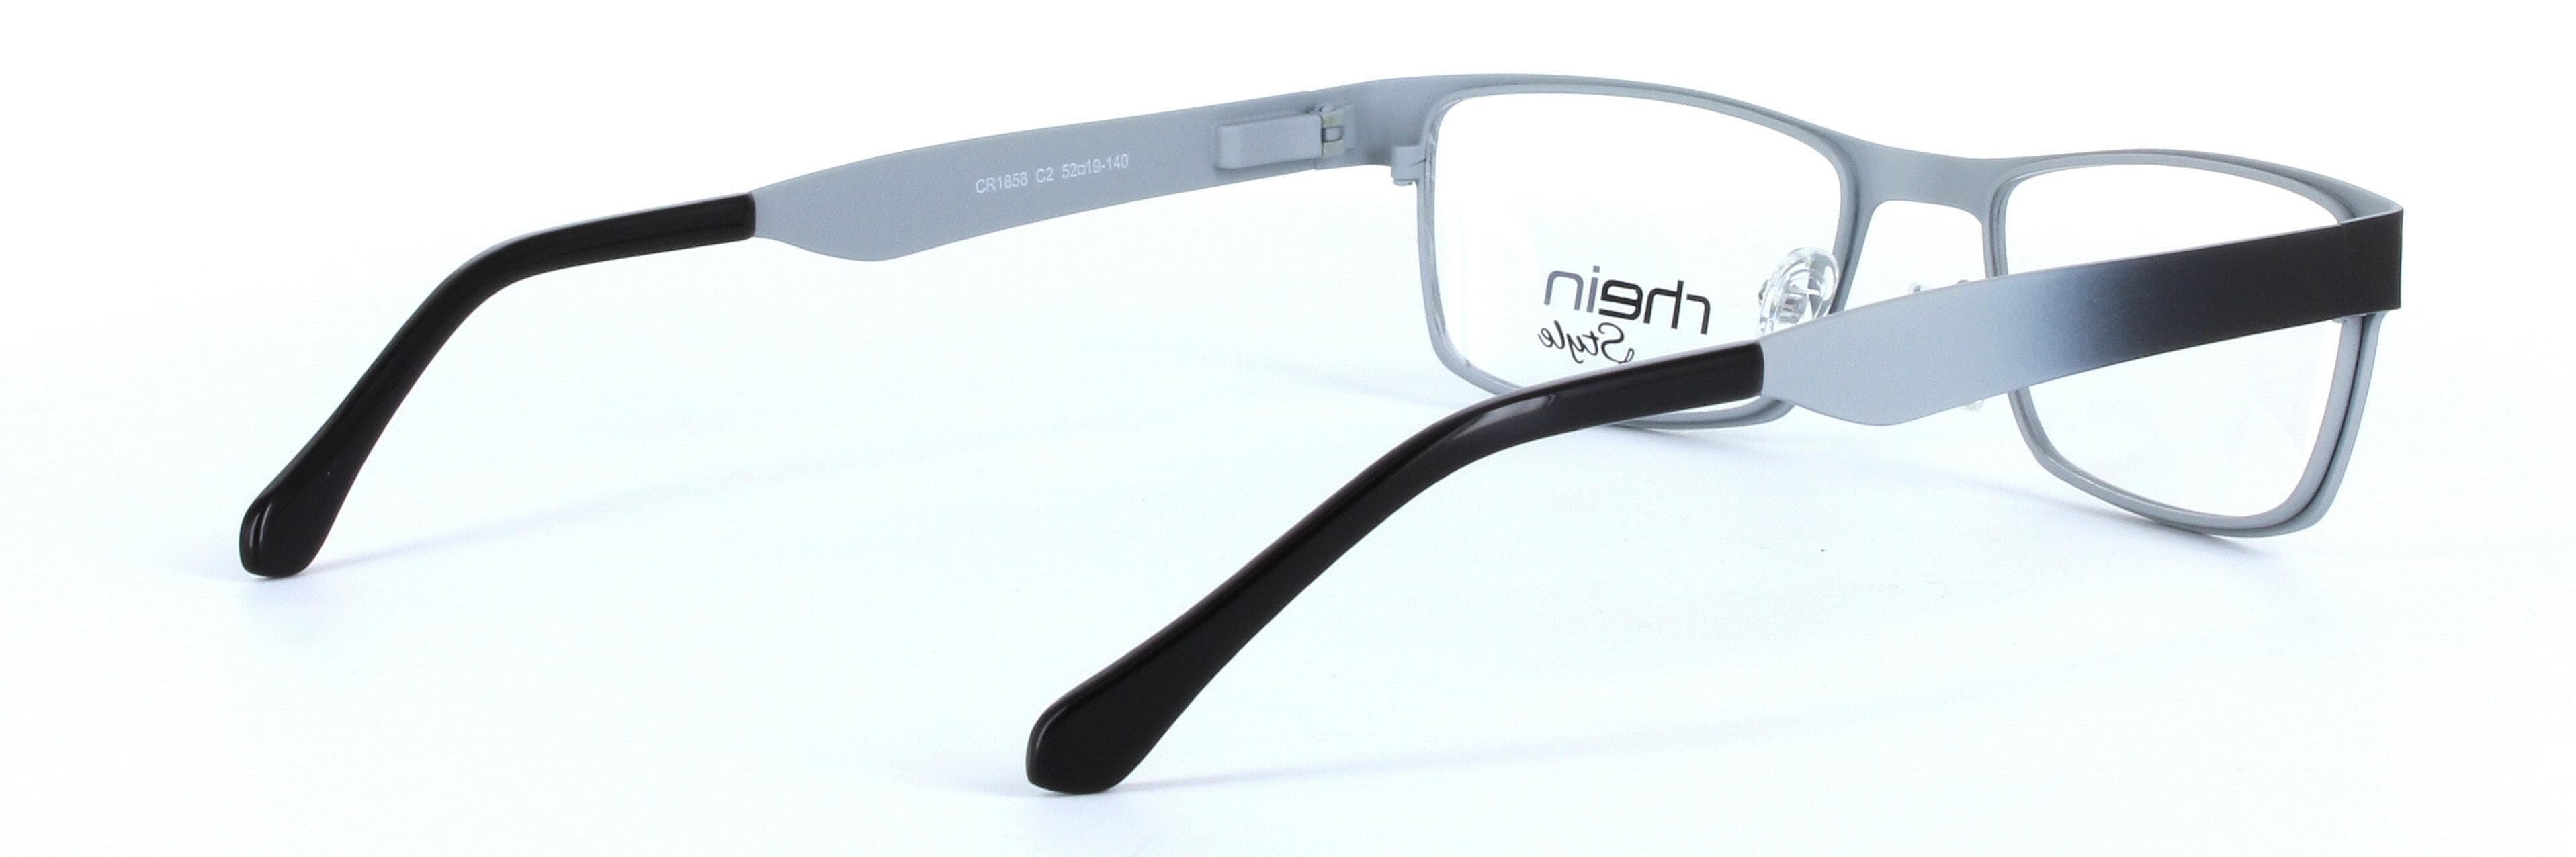 Ambleside Black and Silver Full Rim Rectangular Metal Glasses - Image View 4